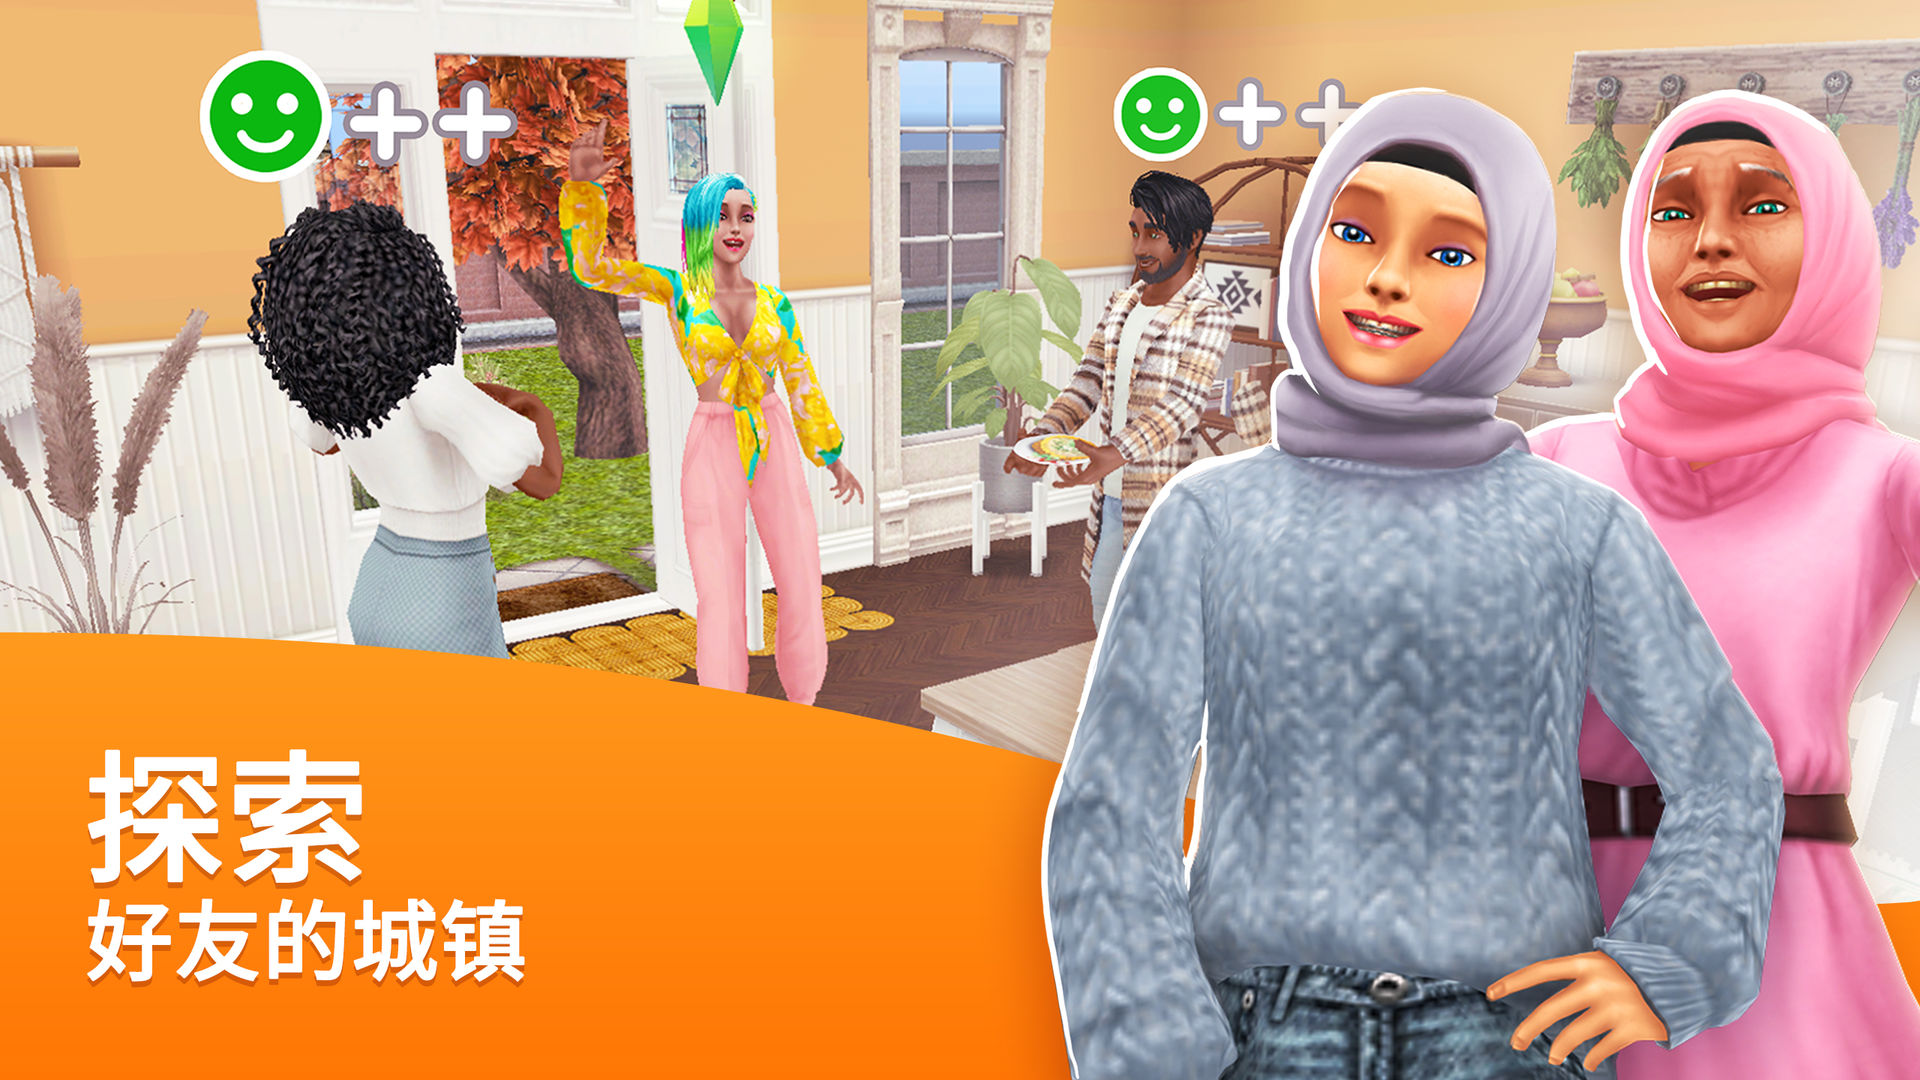 Screenshot of The Sims FreePlay